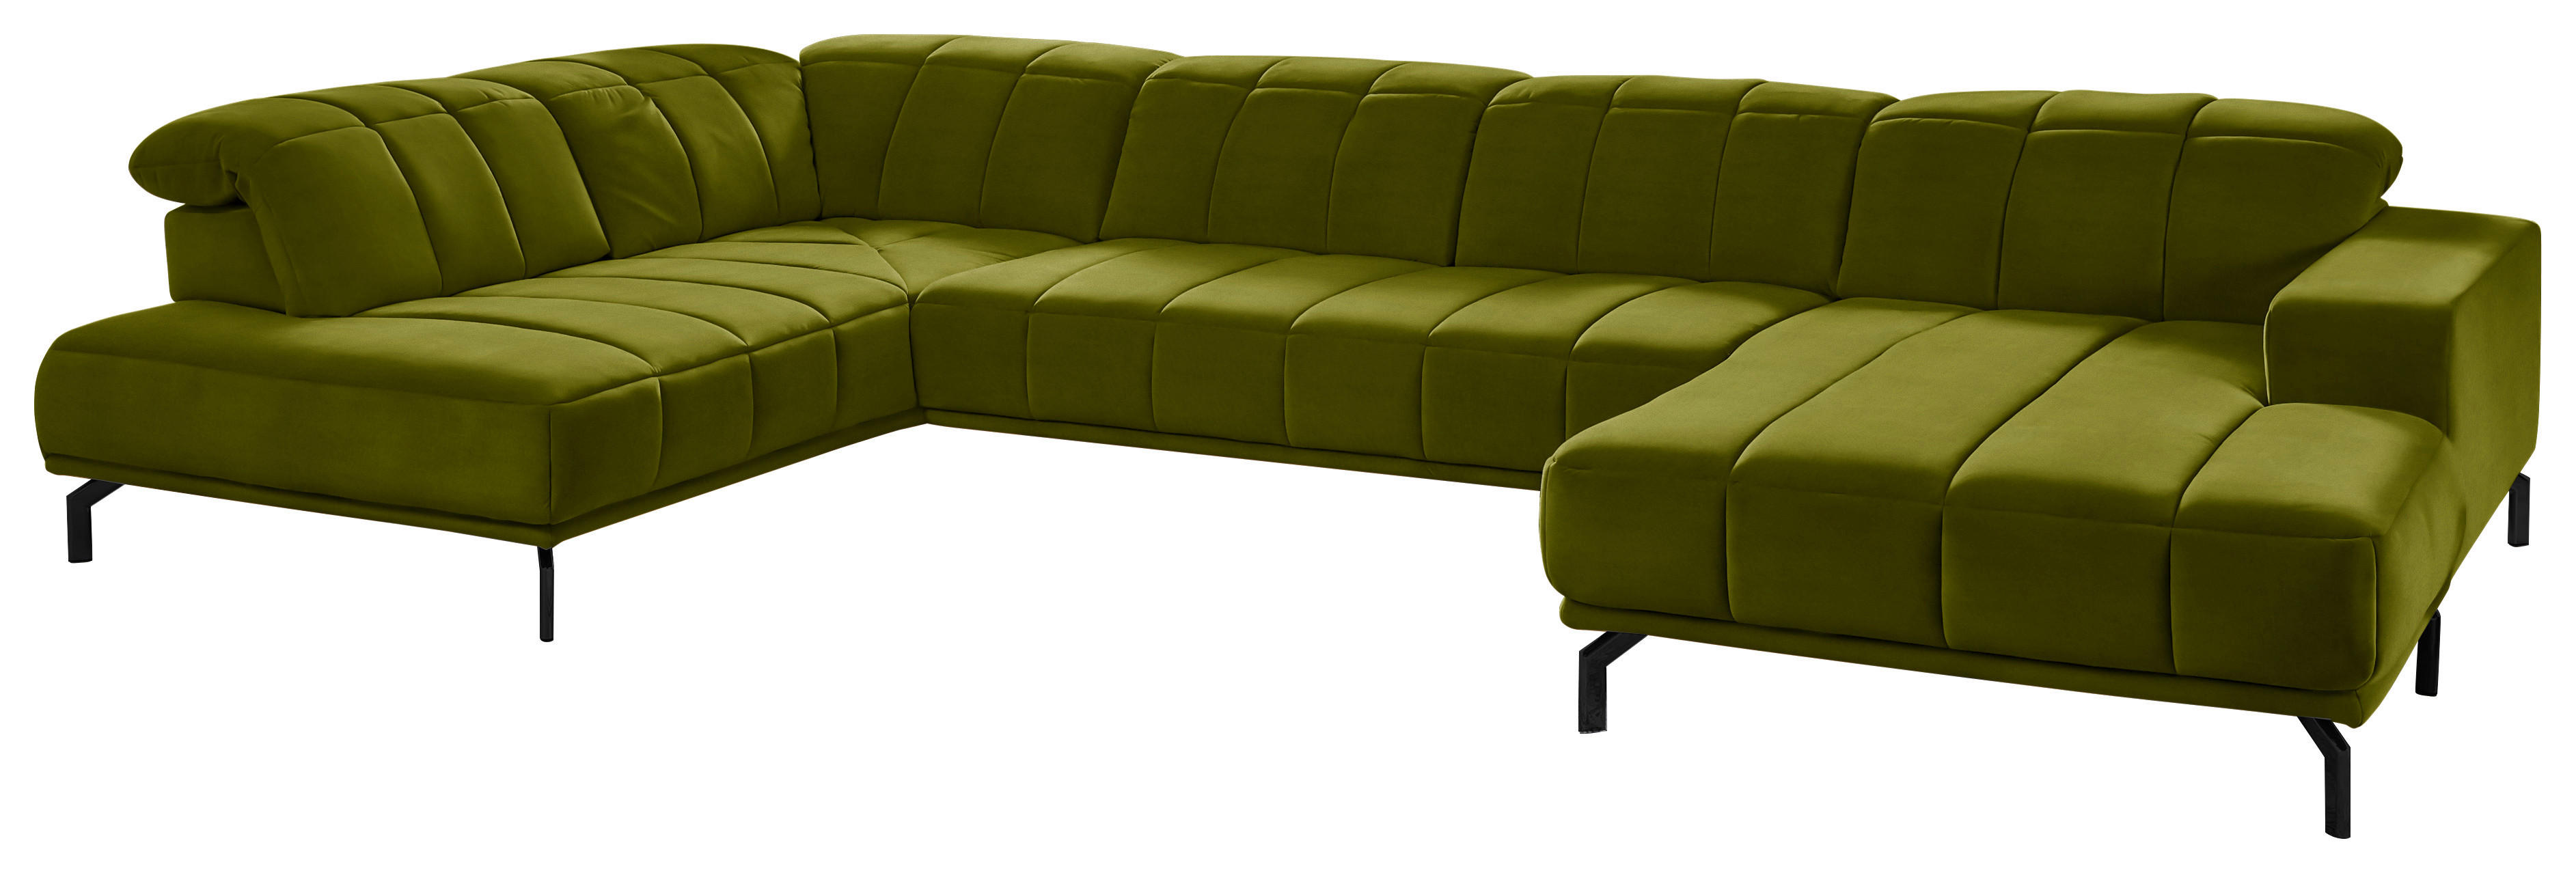 SAROKGARNITÚRA textil zöld  - fekete/zöld, Design, textil/fém (219/383/195cm) - Beldomo Style